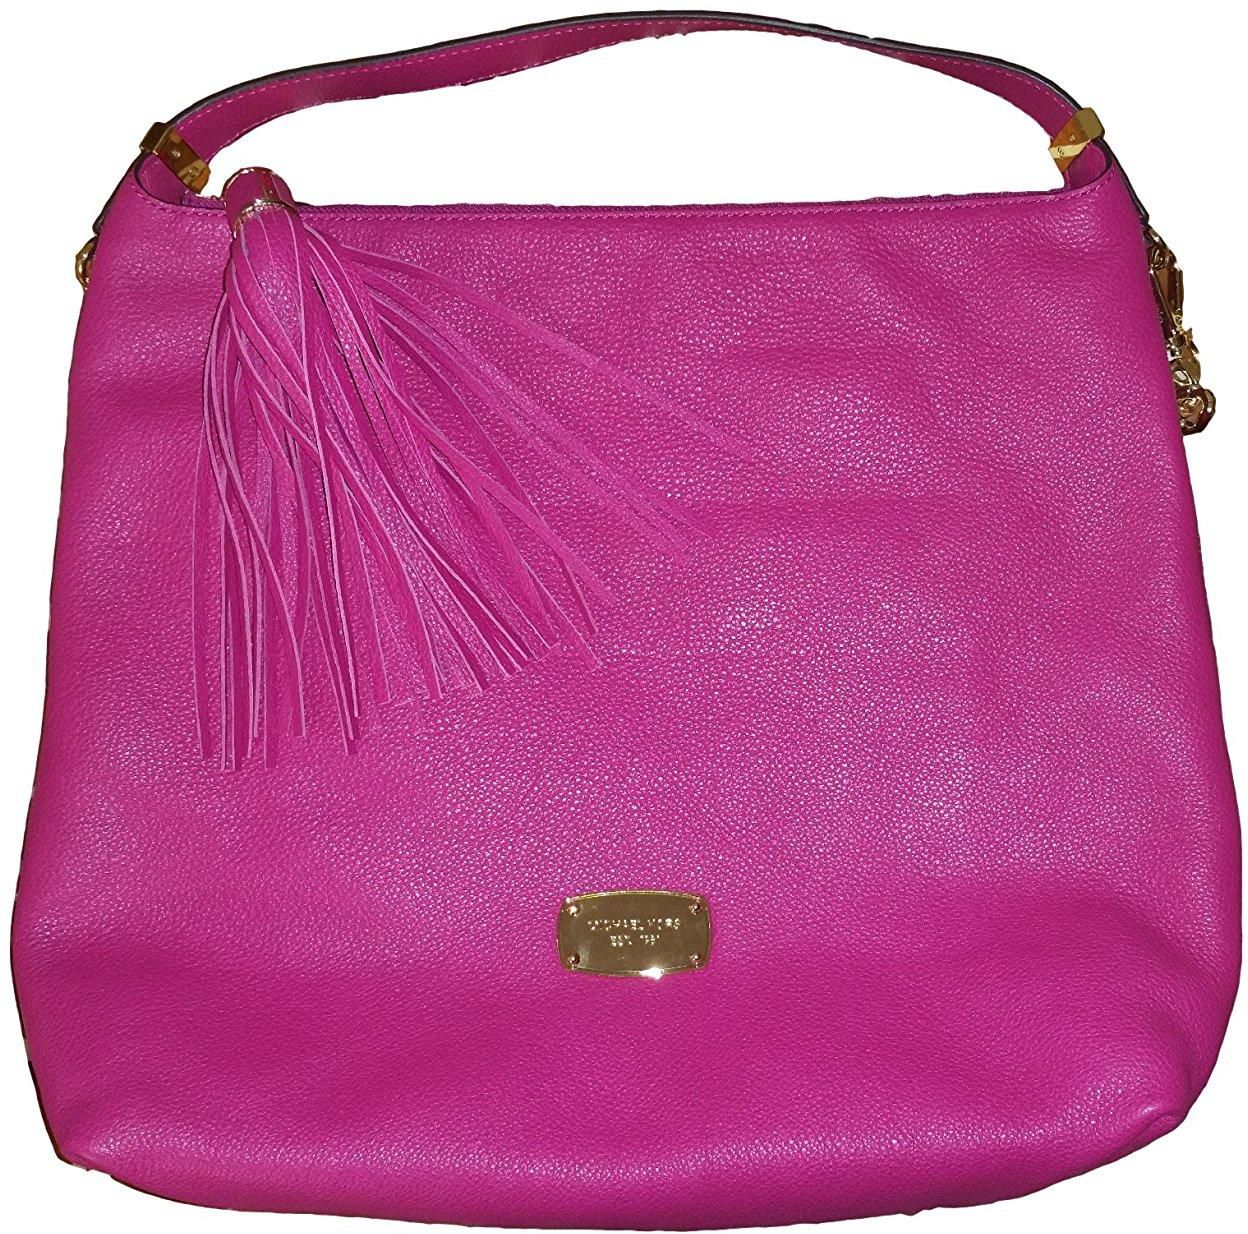 Michael Kors Bedford Fuschia Pink Leather Shoulder Hobo Bag